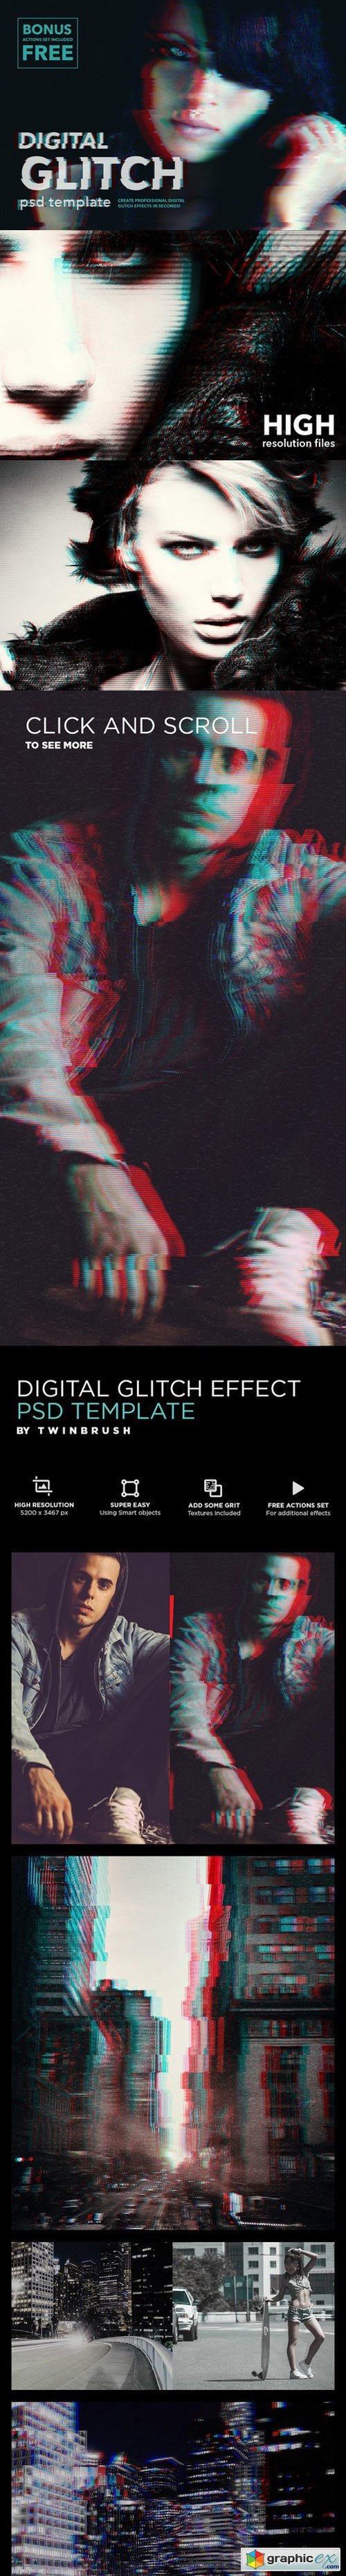 Digital Glitch Effect PSD Templates